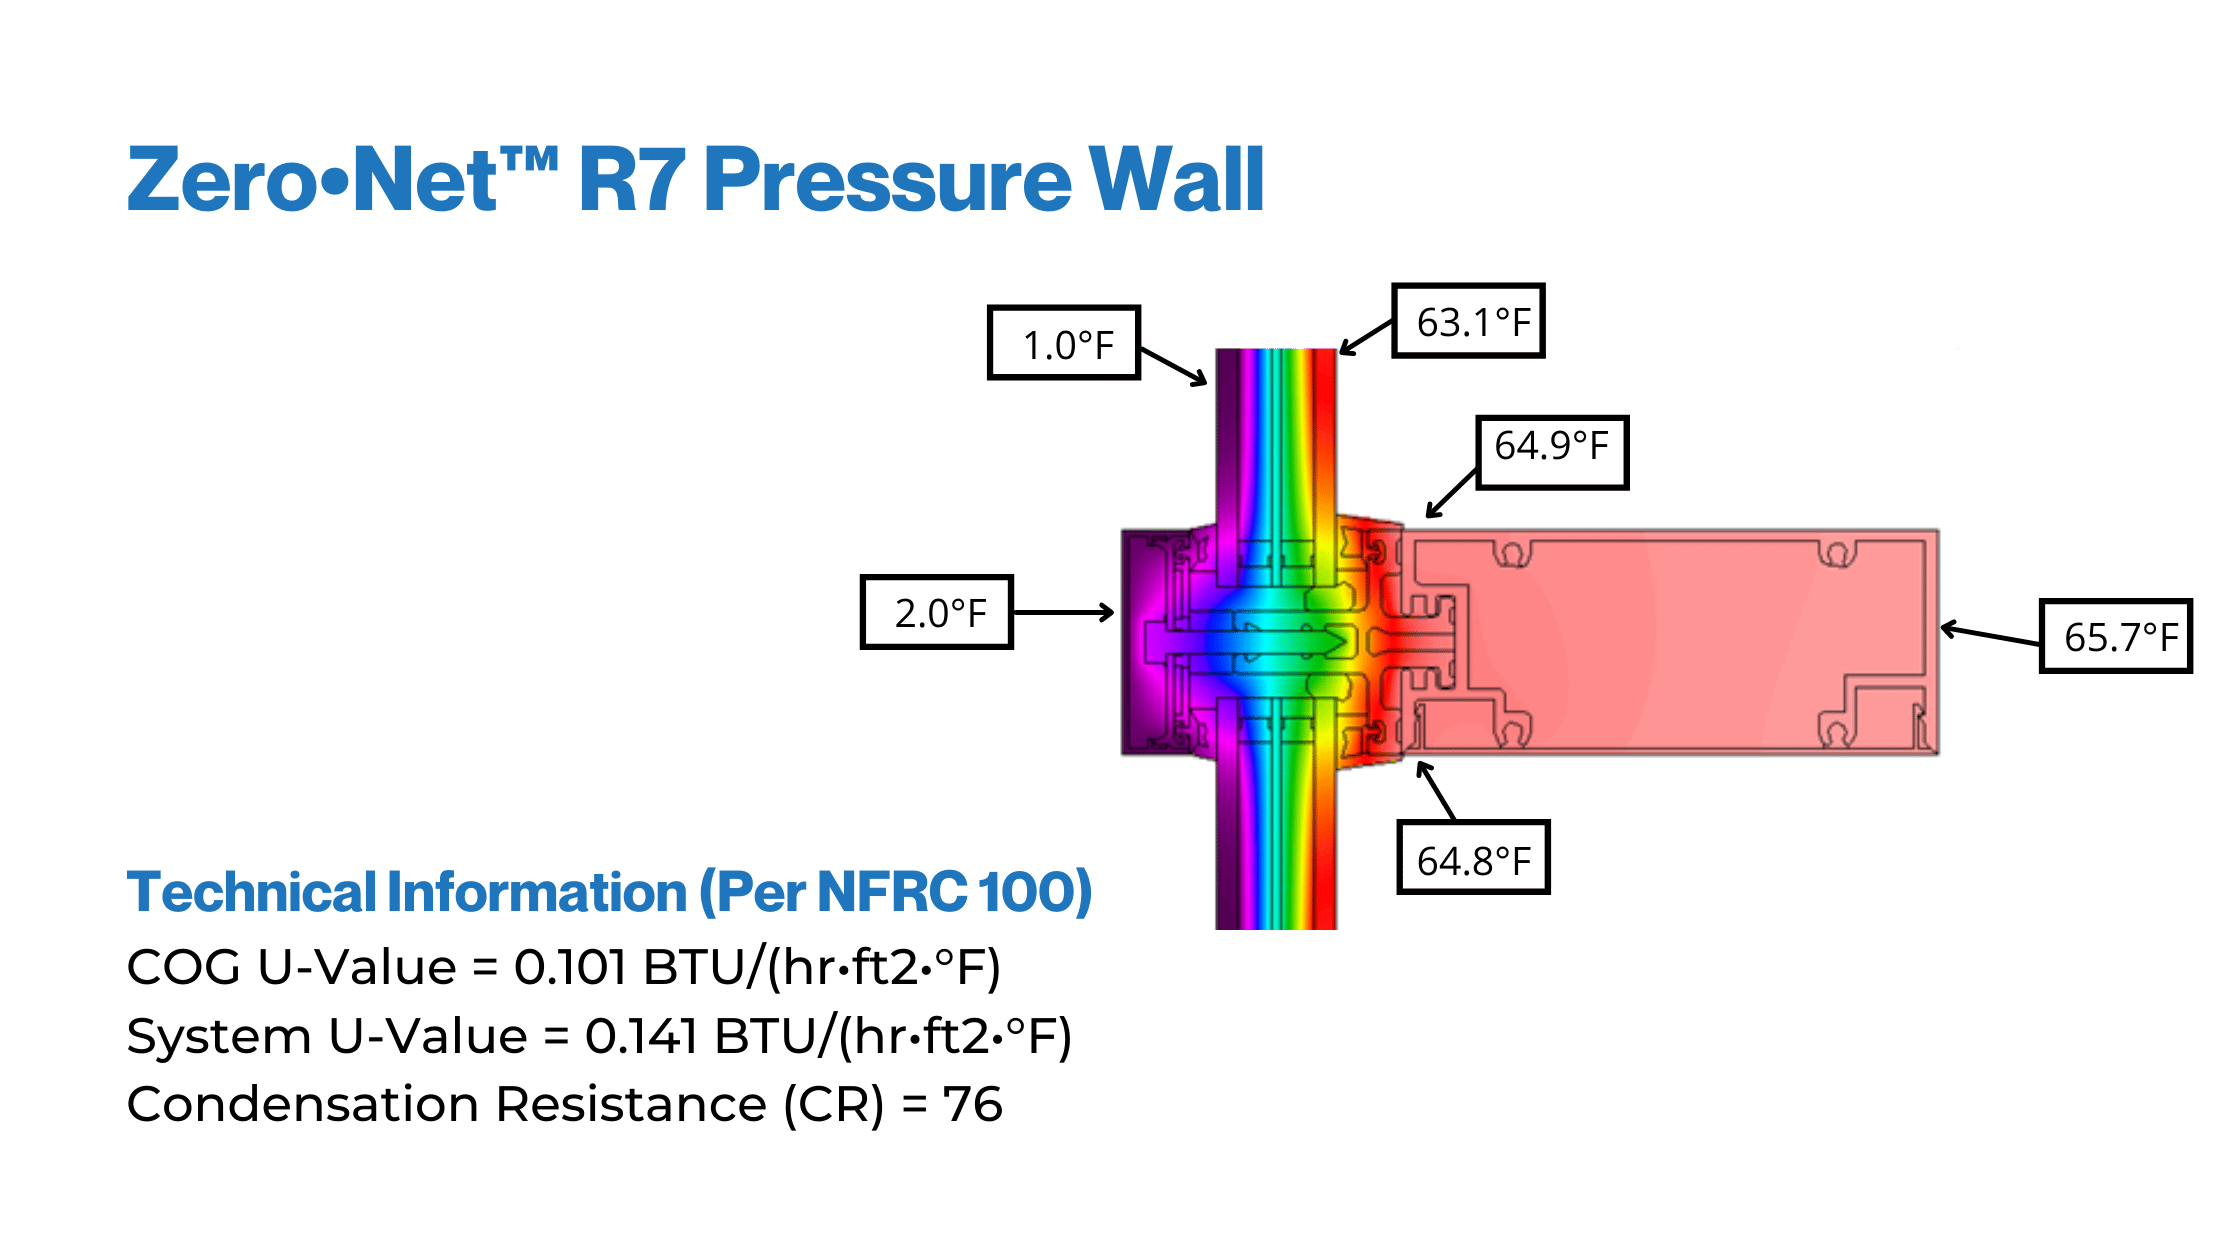 pressure wall thermal image